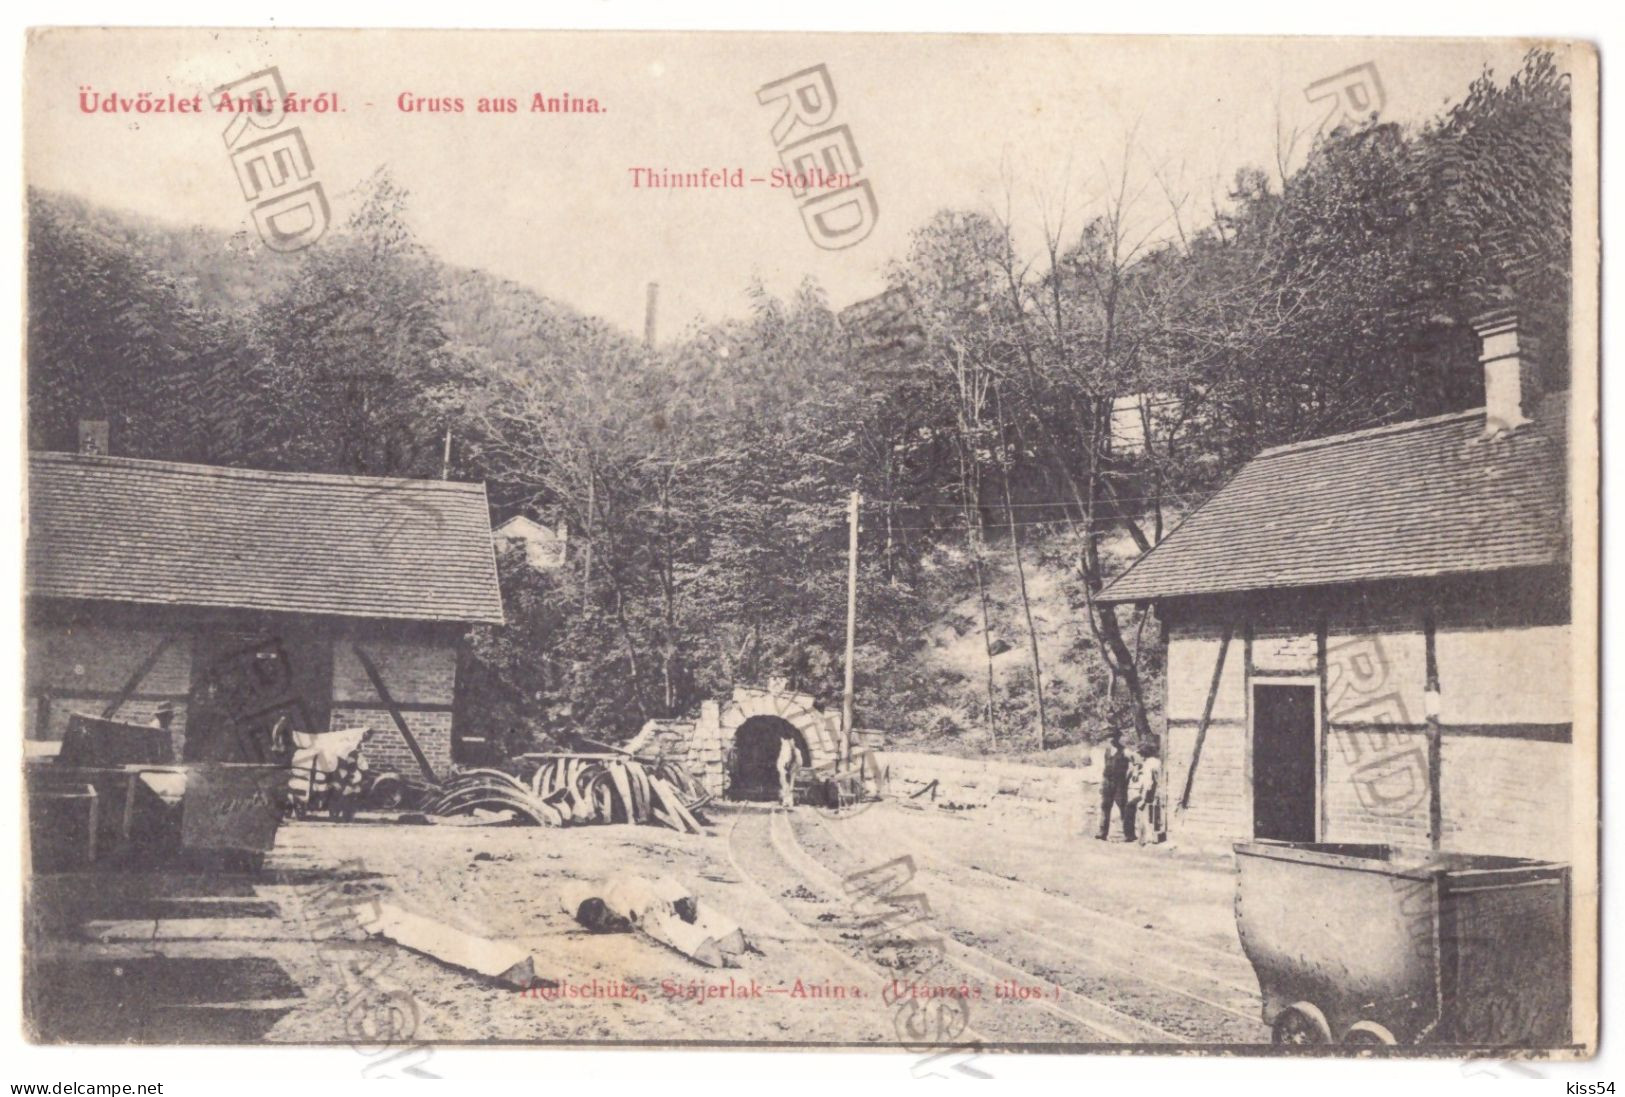 RO - 25433 ANINA, Caras-Severin, Tunnel To Mine, Romania - Old Postcard - Used - 1909 - Roemenië